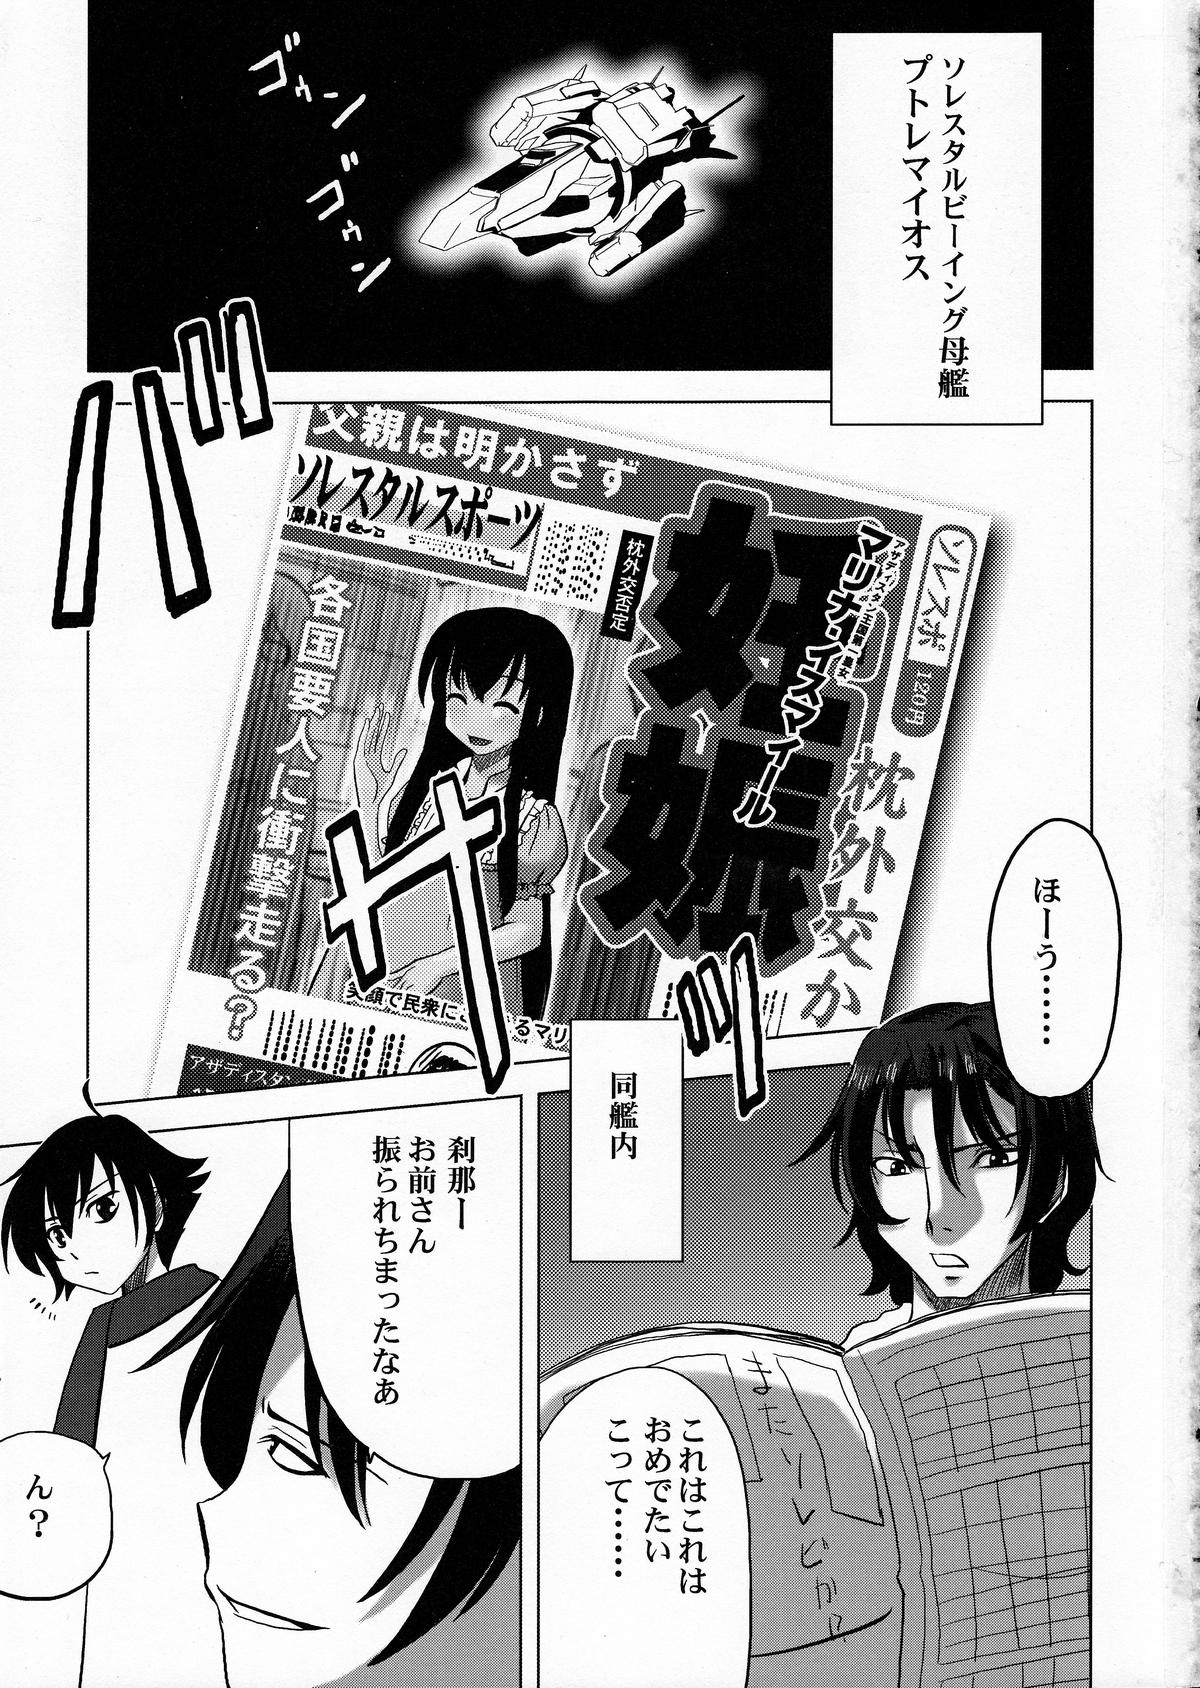 Dicksucking Maguro Kingdom 2009 - Gundam 00 Amador - Page 2